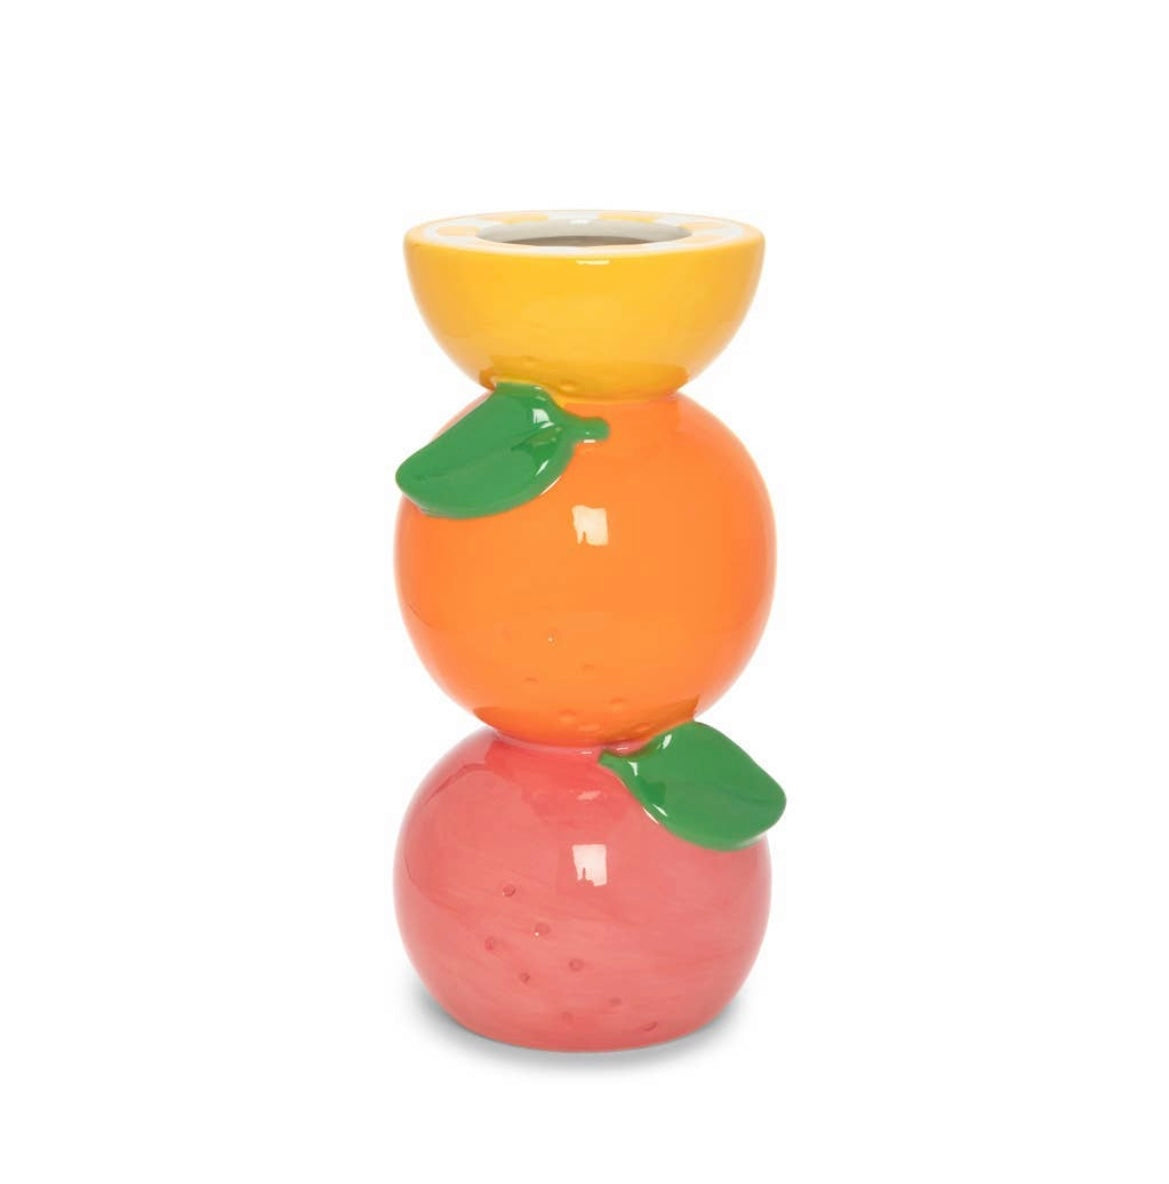 Ban.do Citrus Stacked Ceramic Vase